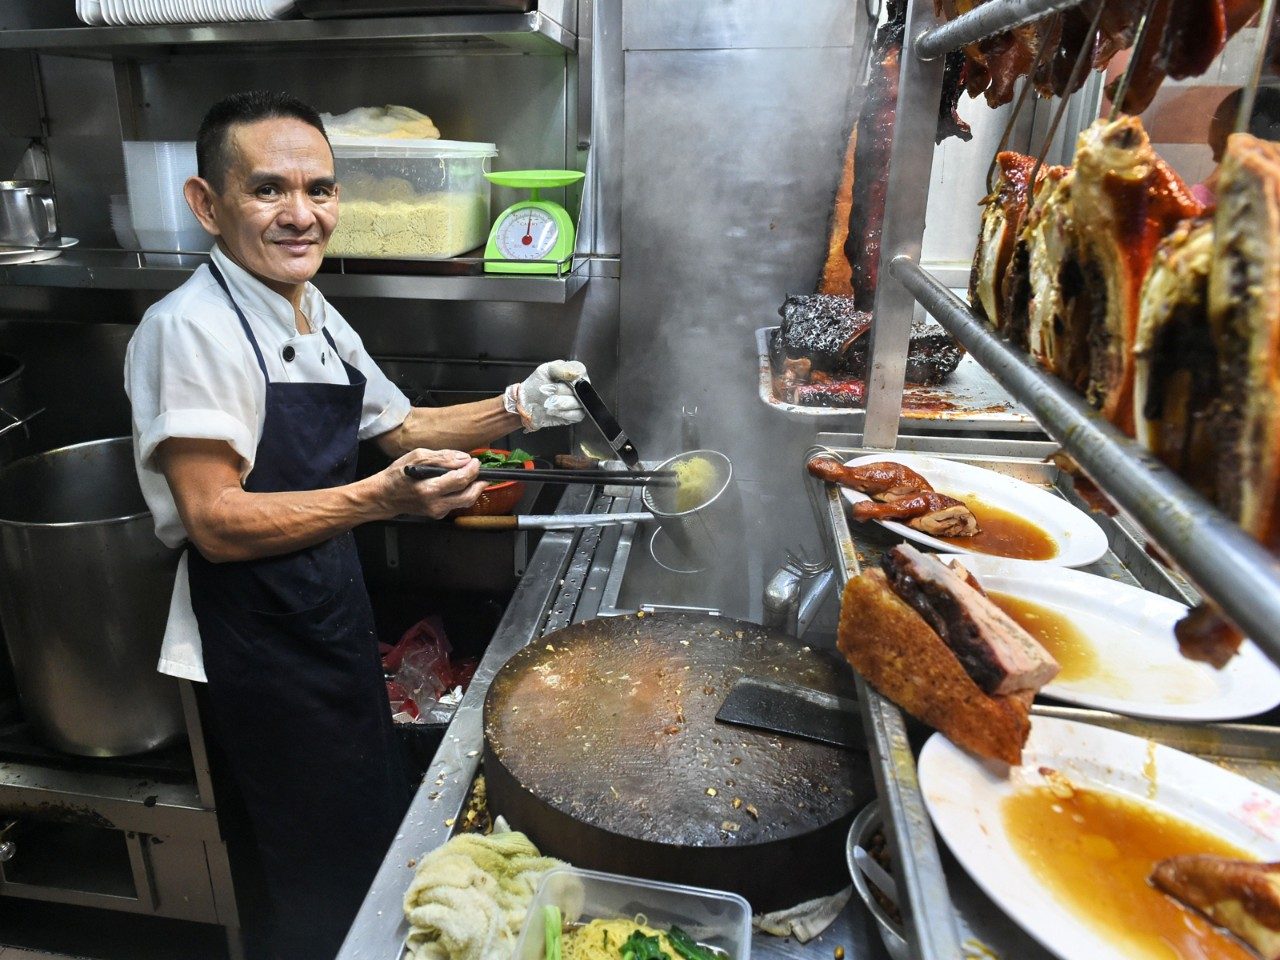 Singapore Street Food Vendor Serves $1.50 Meals And Receives A Prestigious Michelin Star